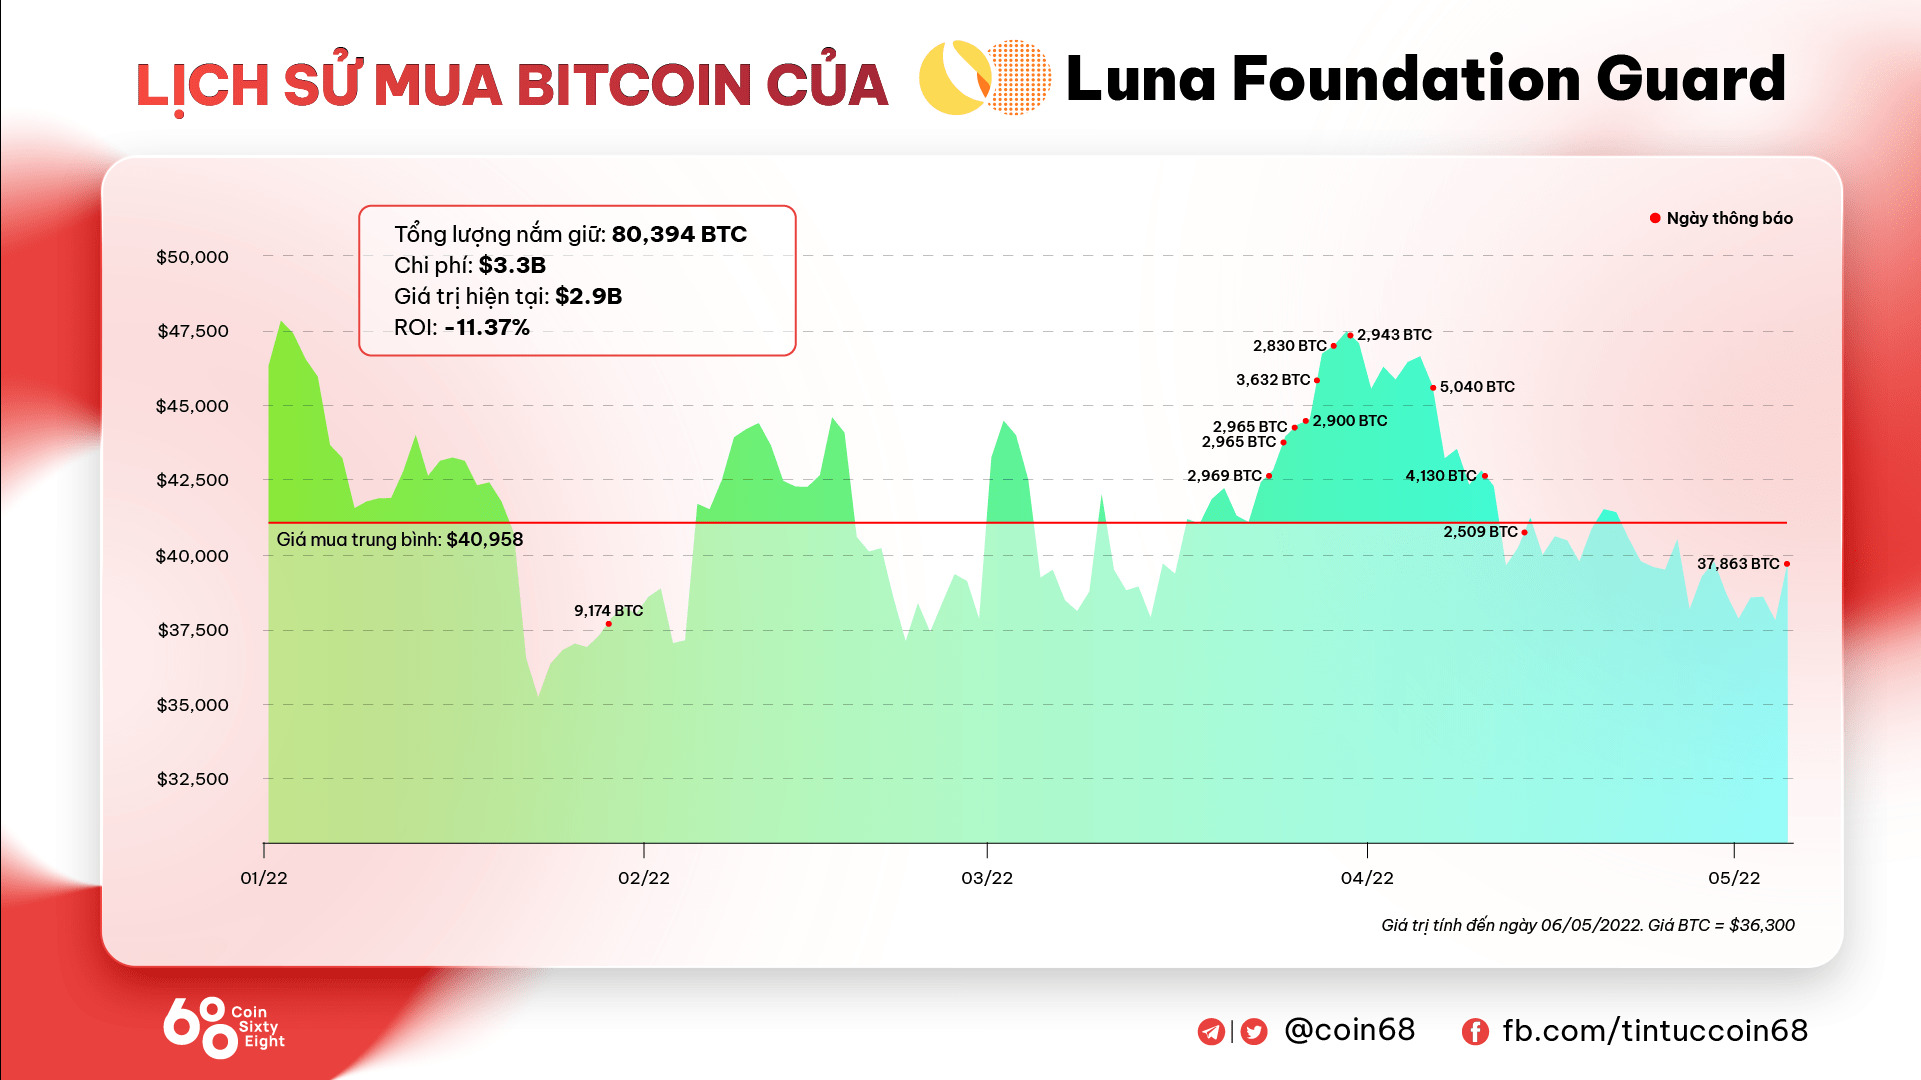 Luna Foundation Guard Mua Thêm 15 Tỷ Usd Bitcoin Giá Btc Dump Về 36500 Usd